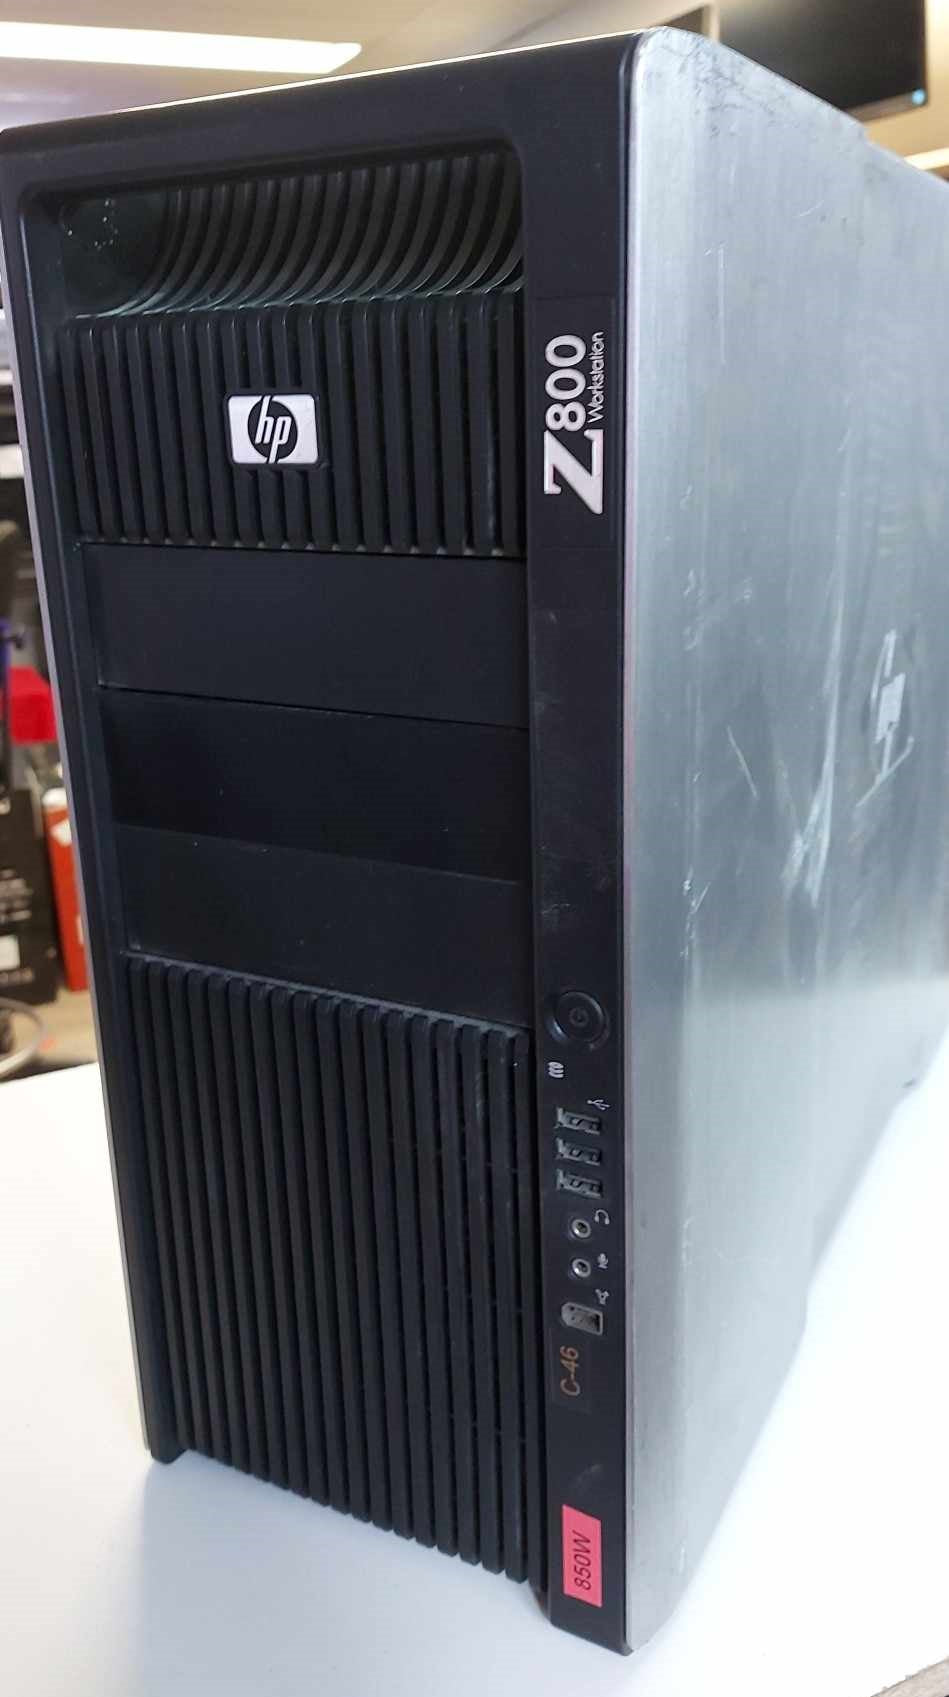 Ordinateur de jeux, multifonction, HP Z800 2 x Intel Xeon E5640 2,66GHz SSD 120GB HDD 500GB 48GB NVIDIA Quadro 4000 2Go DDR5